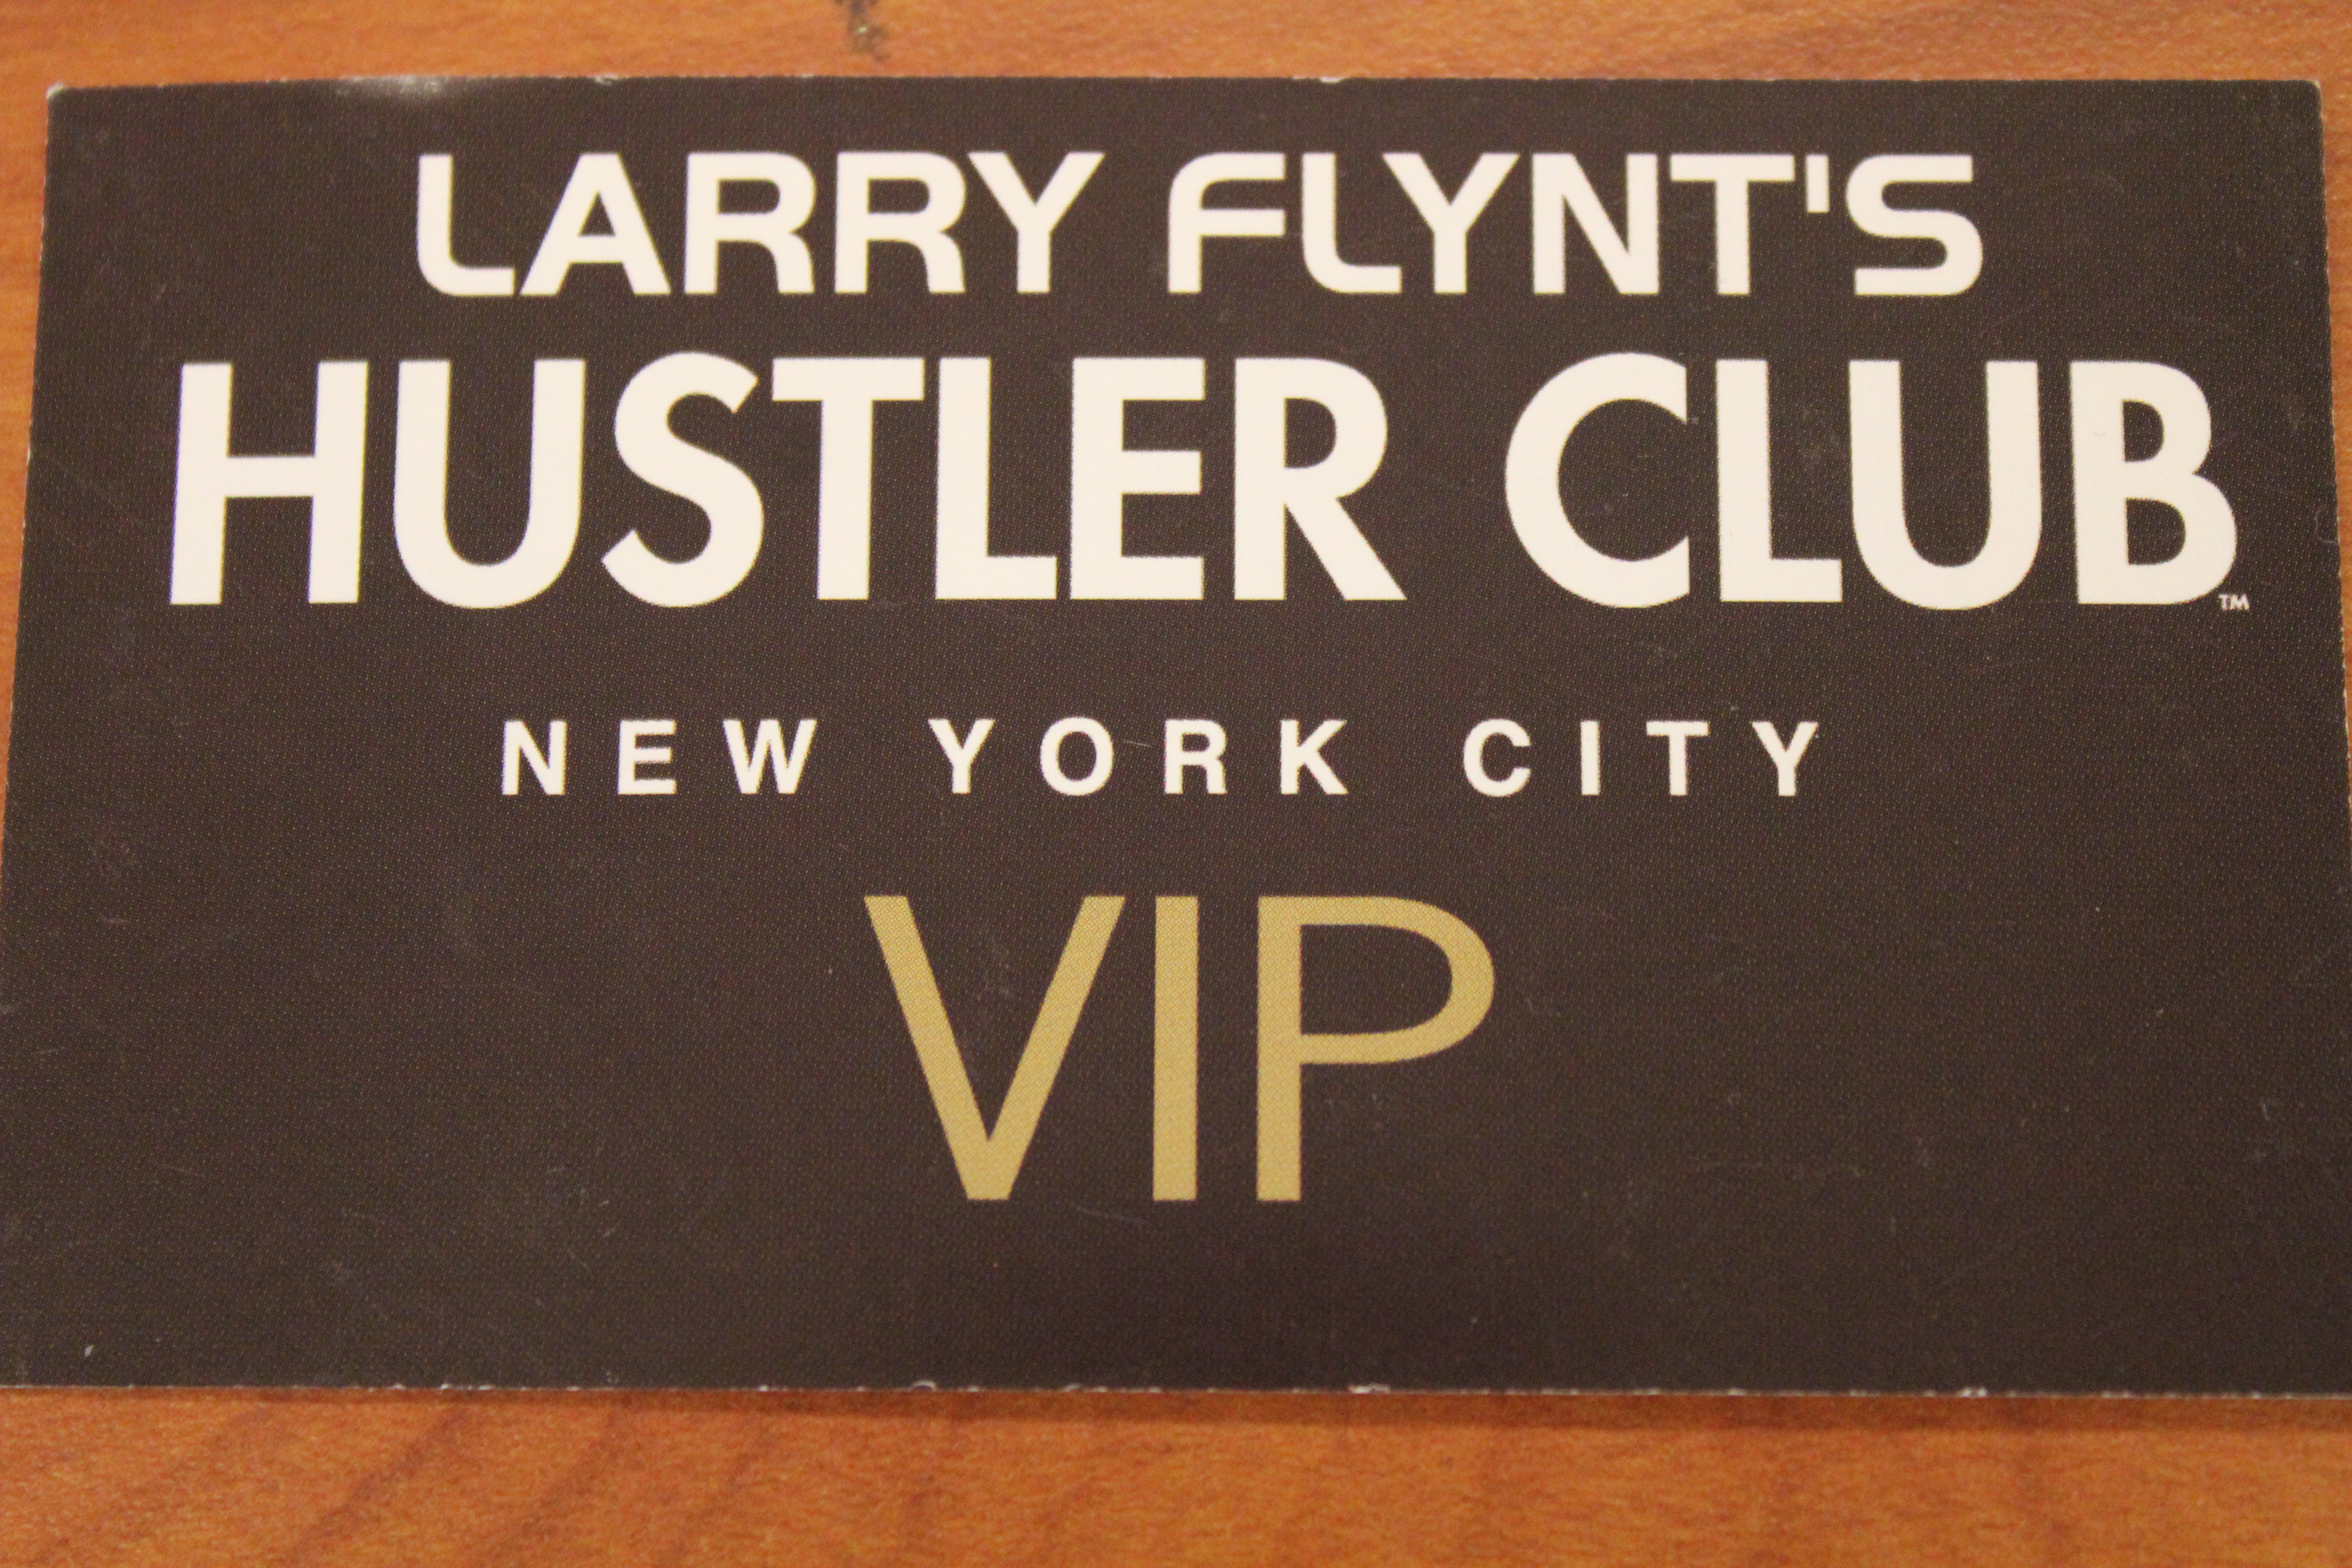 Hustler club new york city